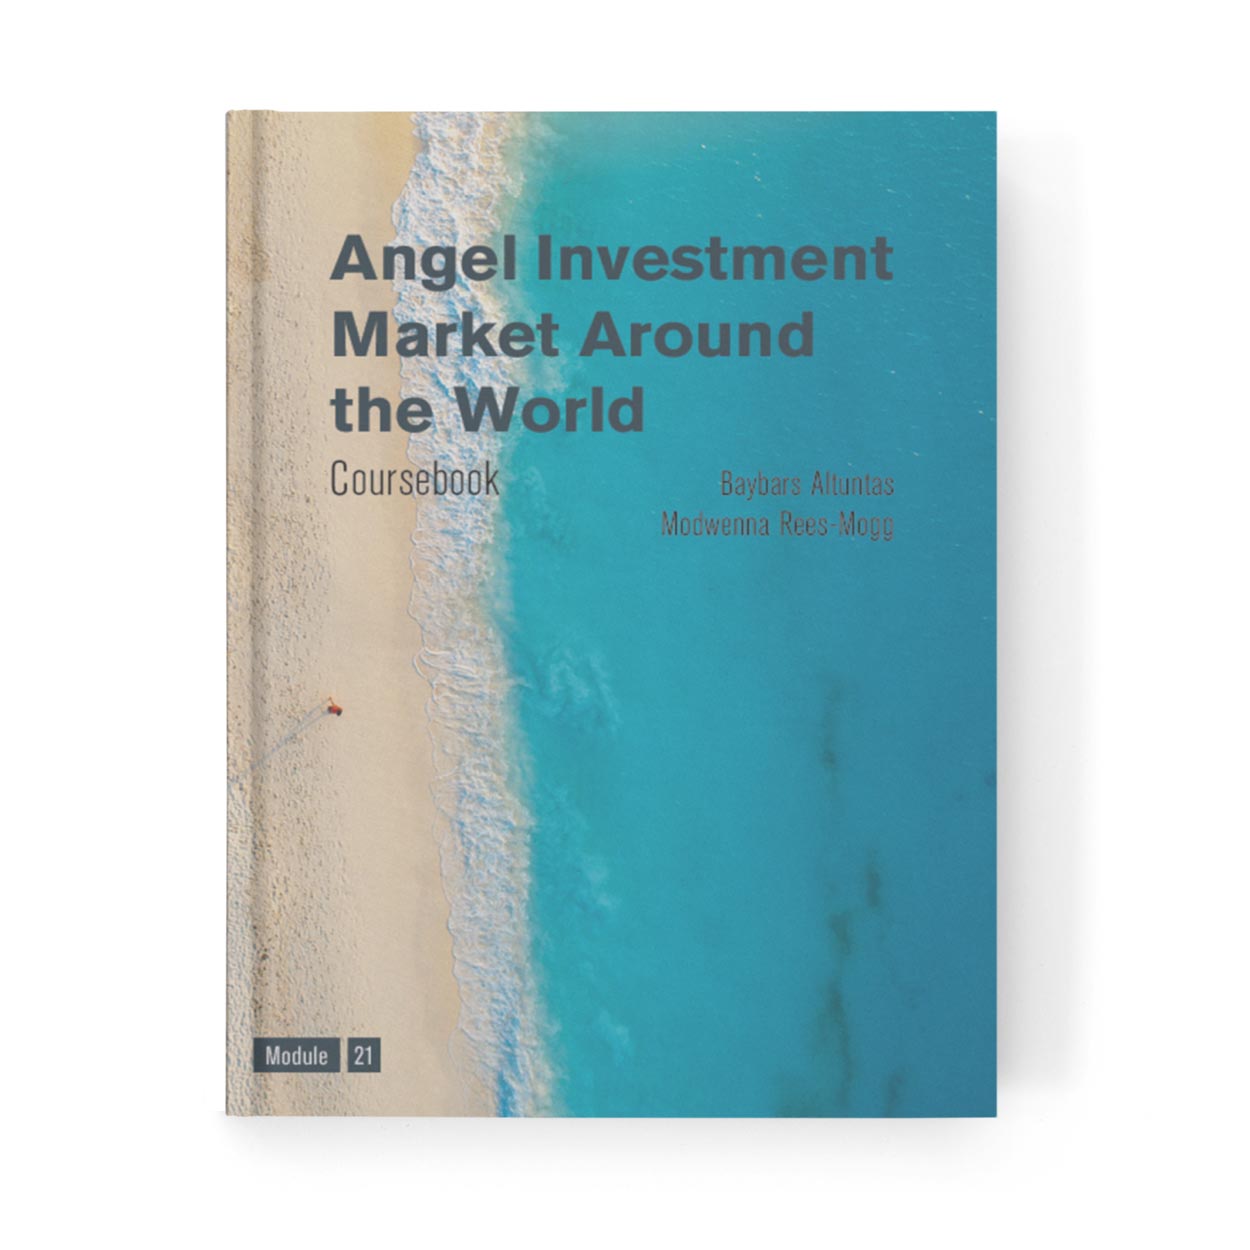 Angel Investment Market Around the World Coursebook